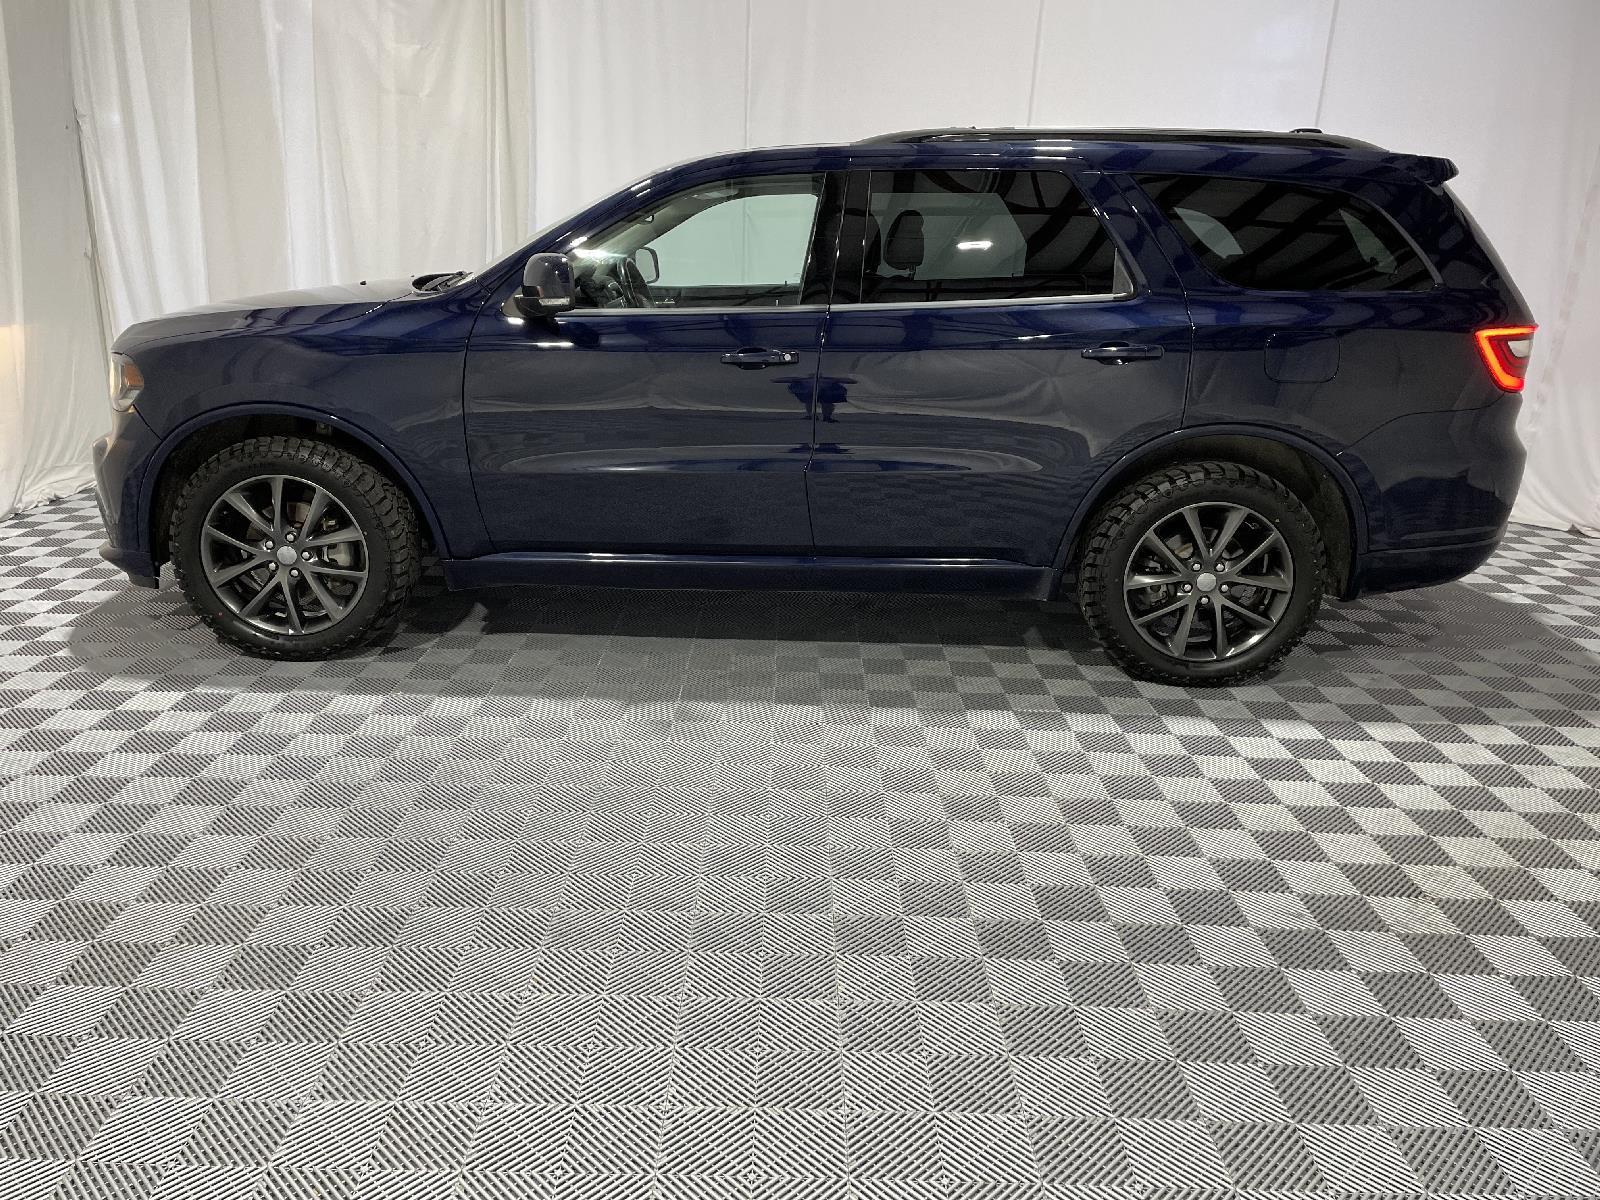 Used 2018 Dodge Durango GT SUV for sale in St Joseph MO